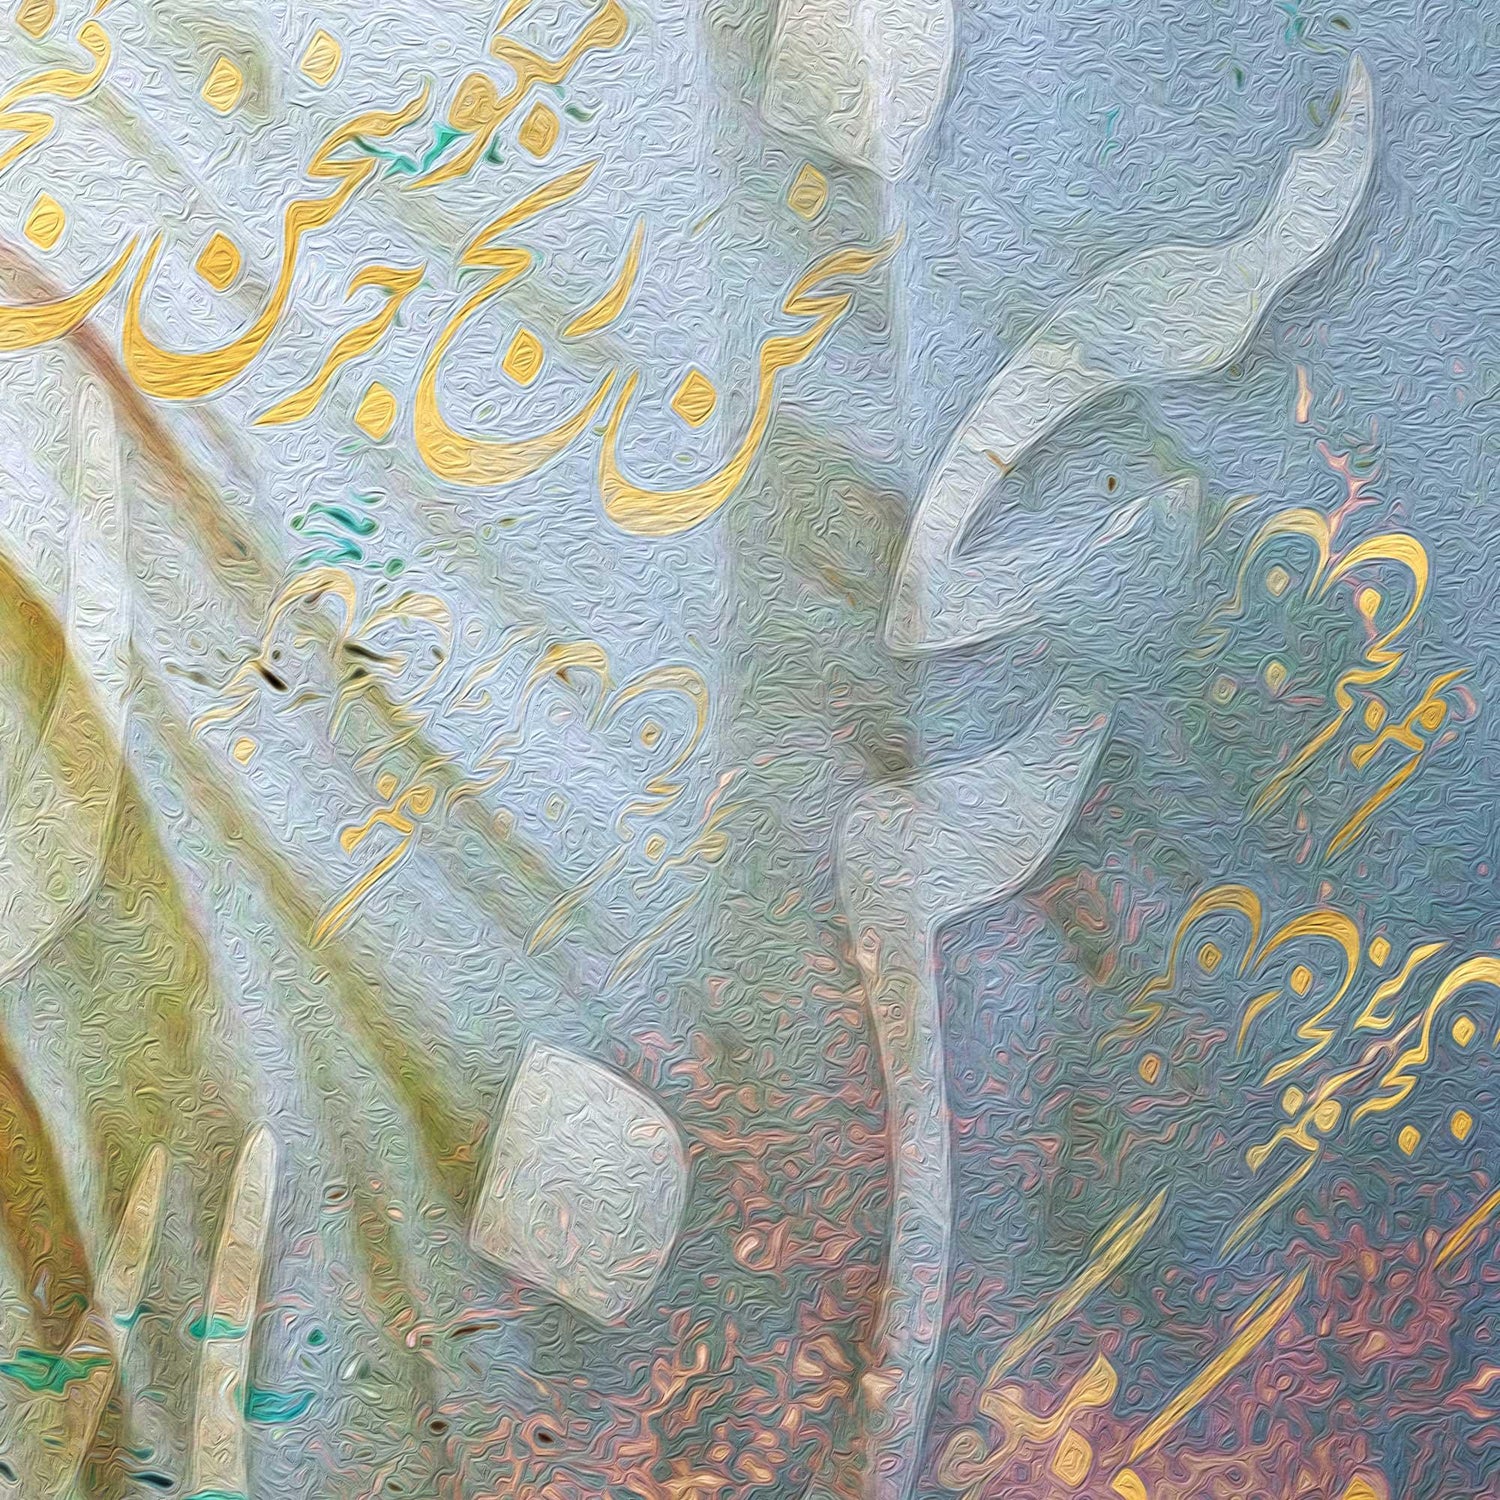 Just talk about the treasure | Persian Wall Art | Persian Home Wall Decor - ORIAVI Persian Art, persian artwork for sale, persian calligraphy, persian calligraphy wall art, persian mix media wall art, persian painting, persian wall art